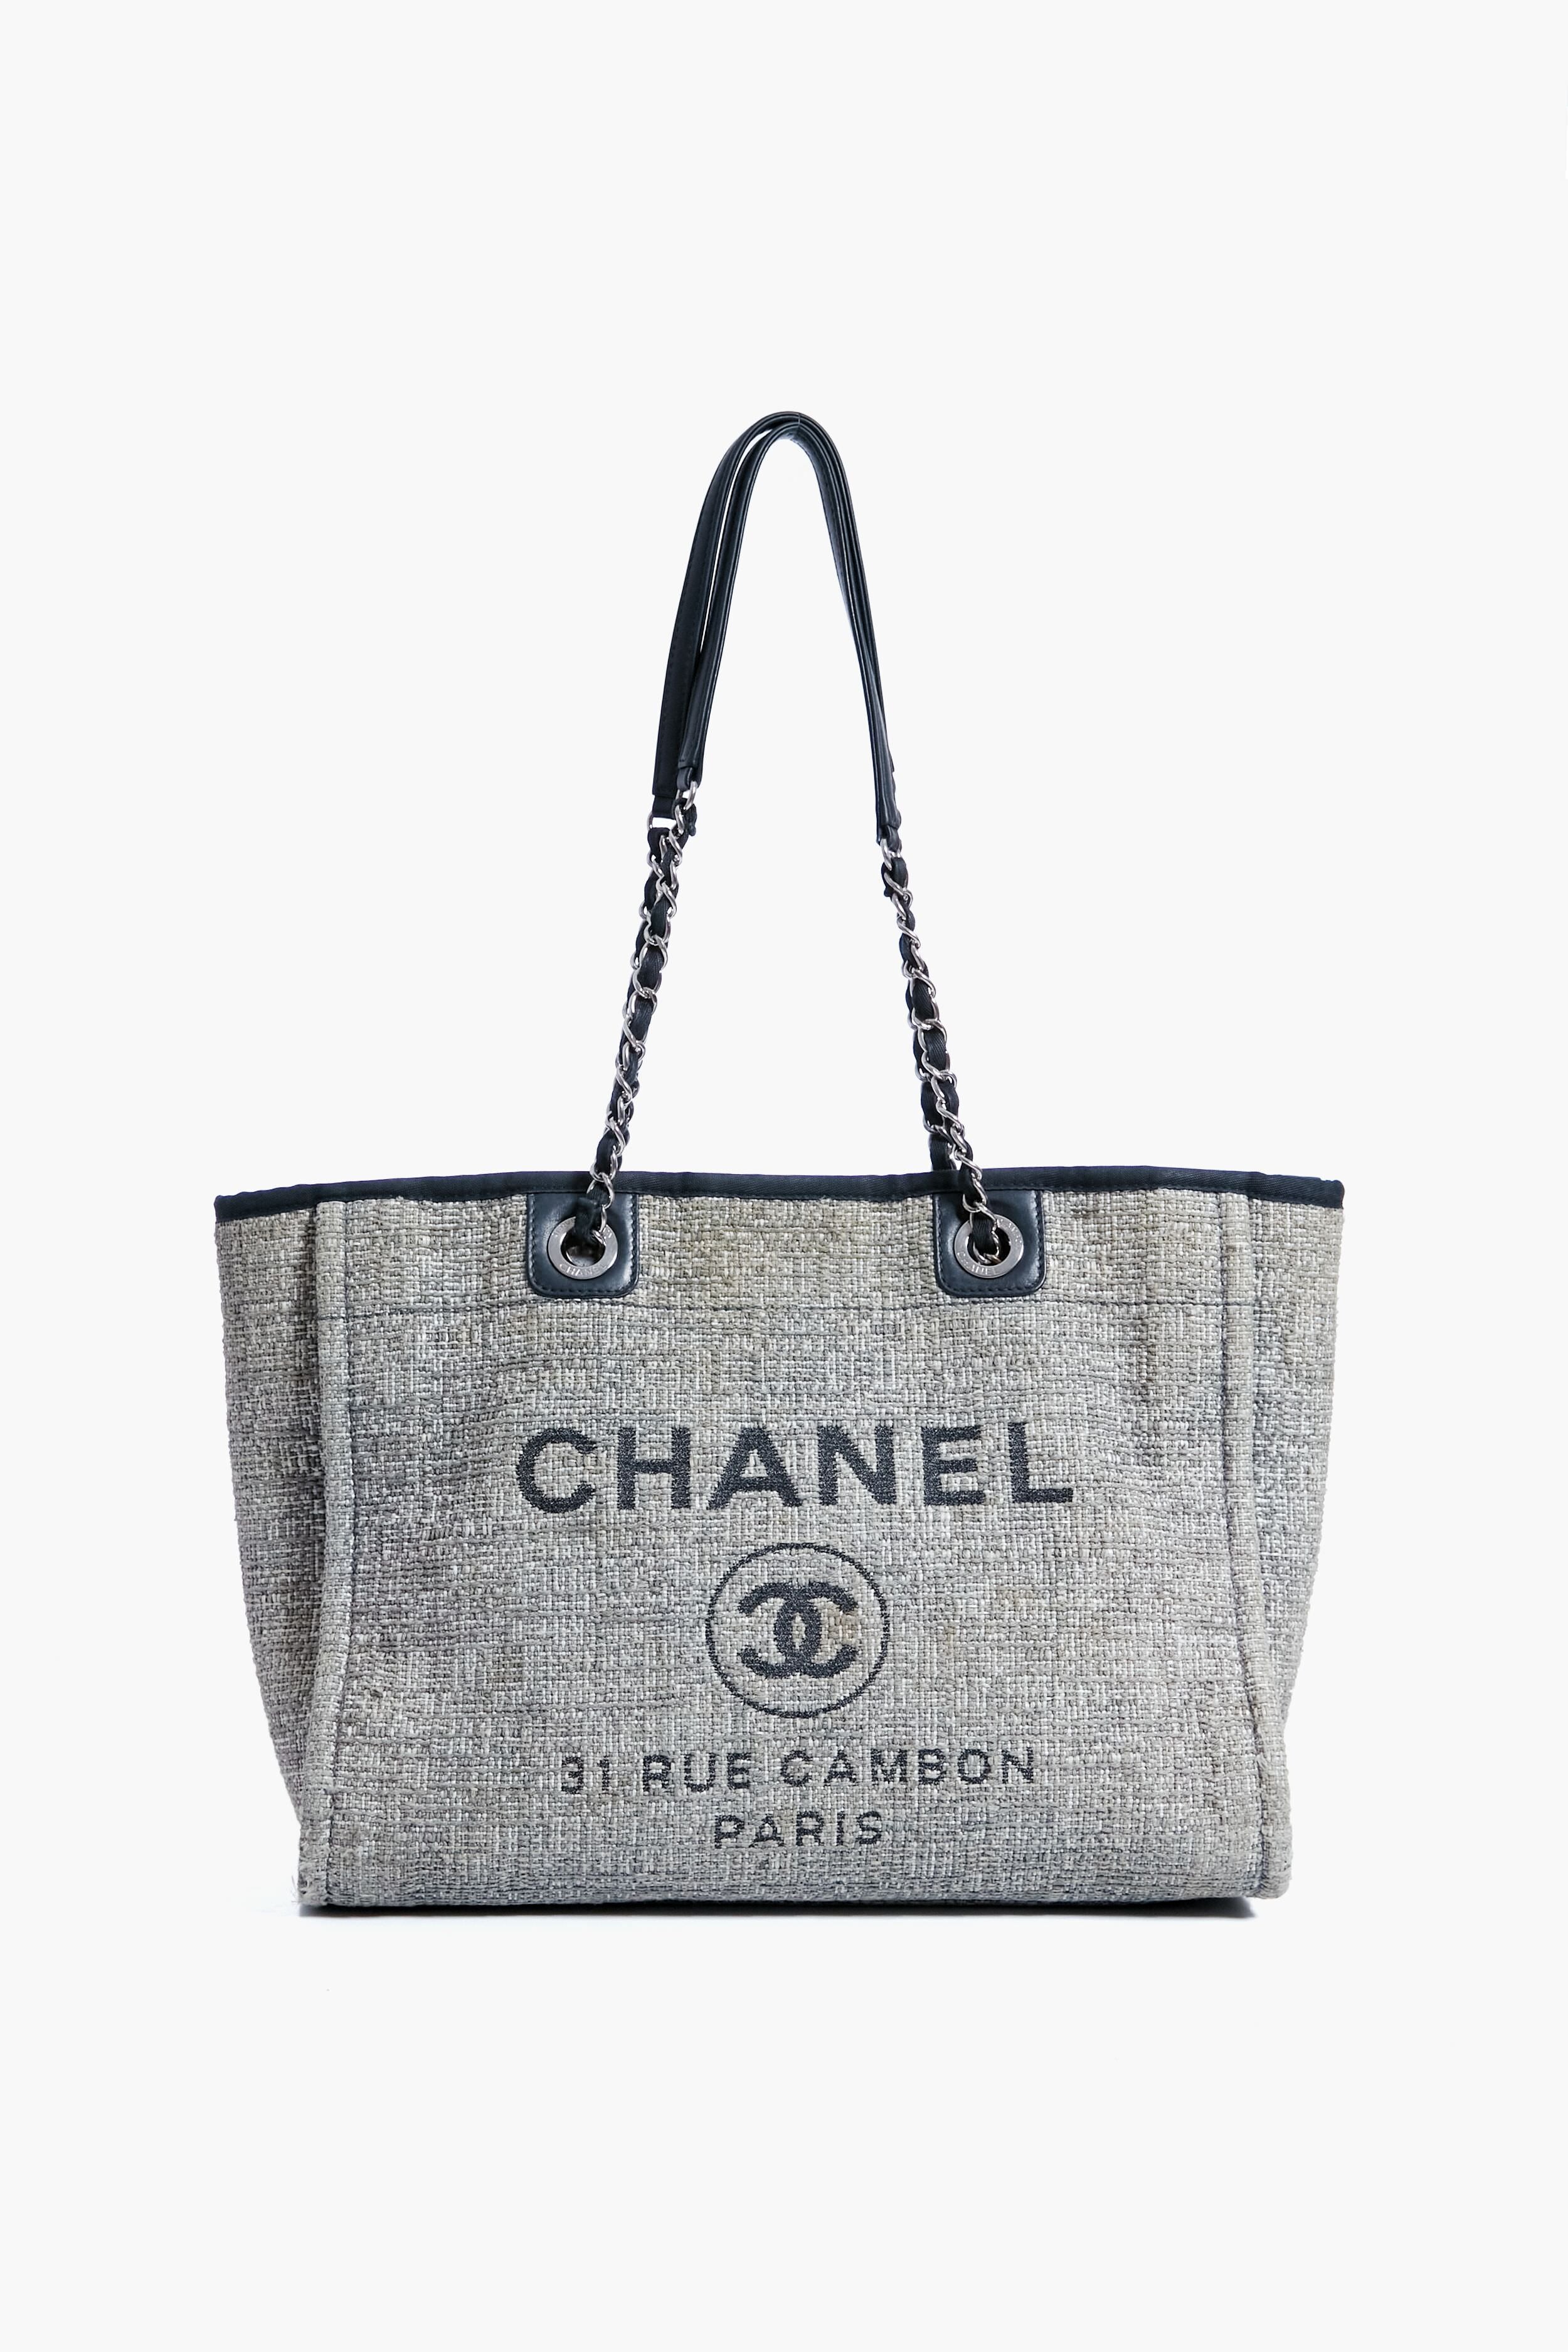 Chanel - Authenticated Deauville Handbag - Cloth Black Plain for Women, Never Worn